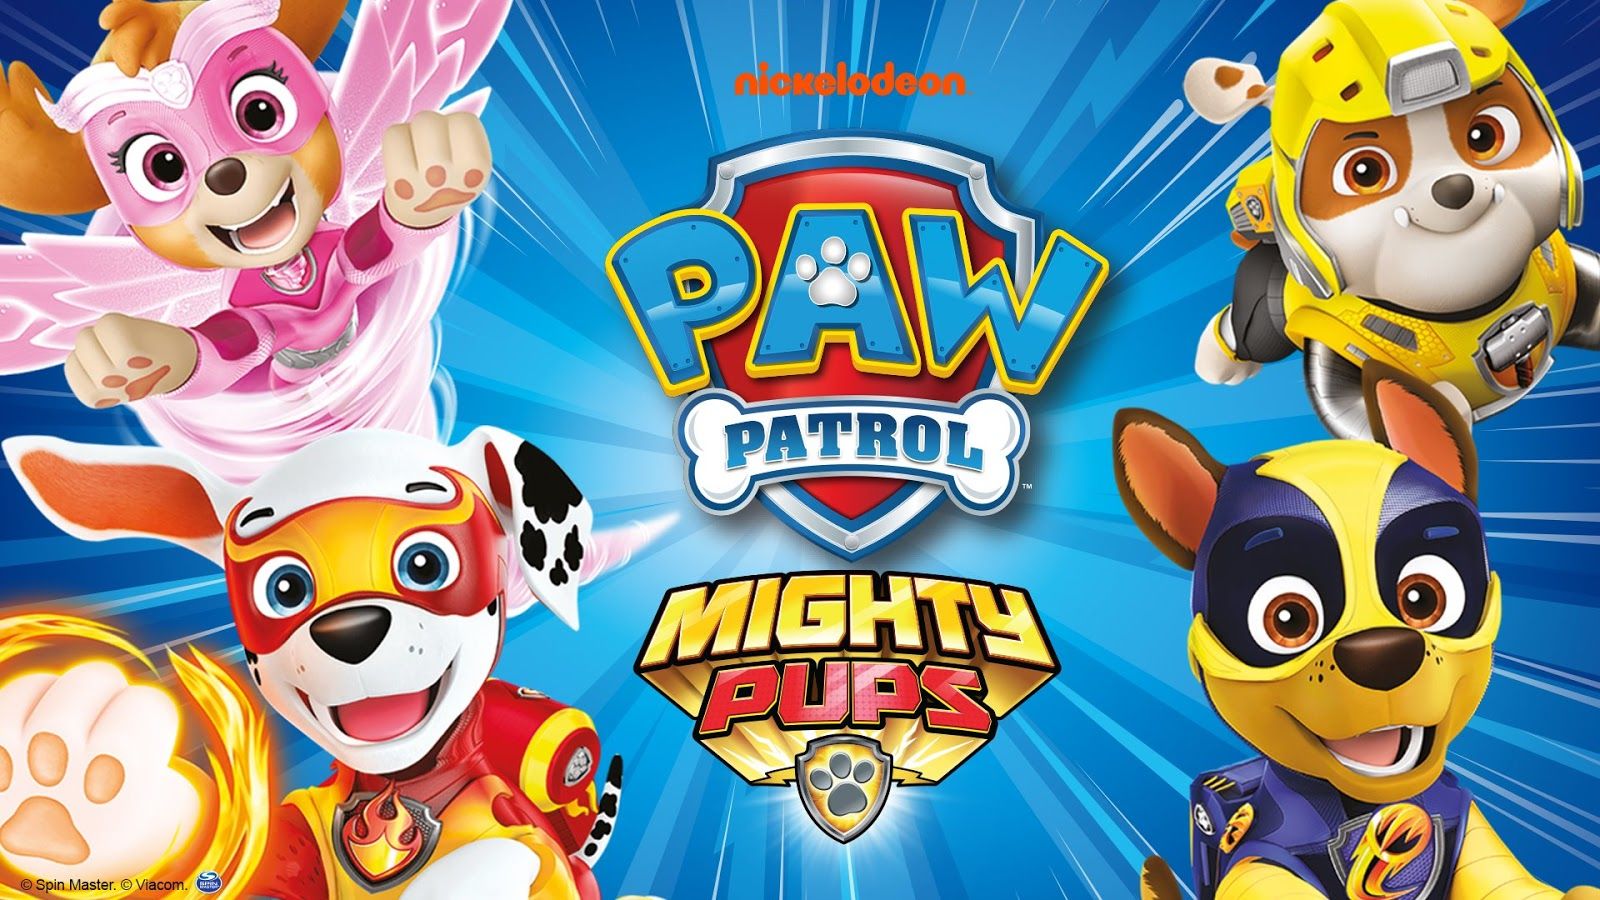 Paw Patrol Mighty pups